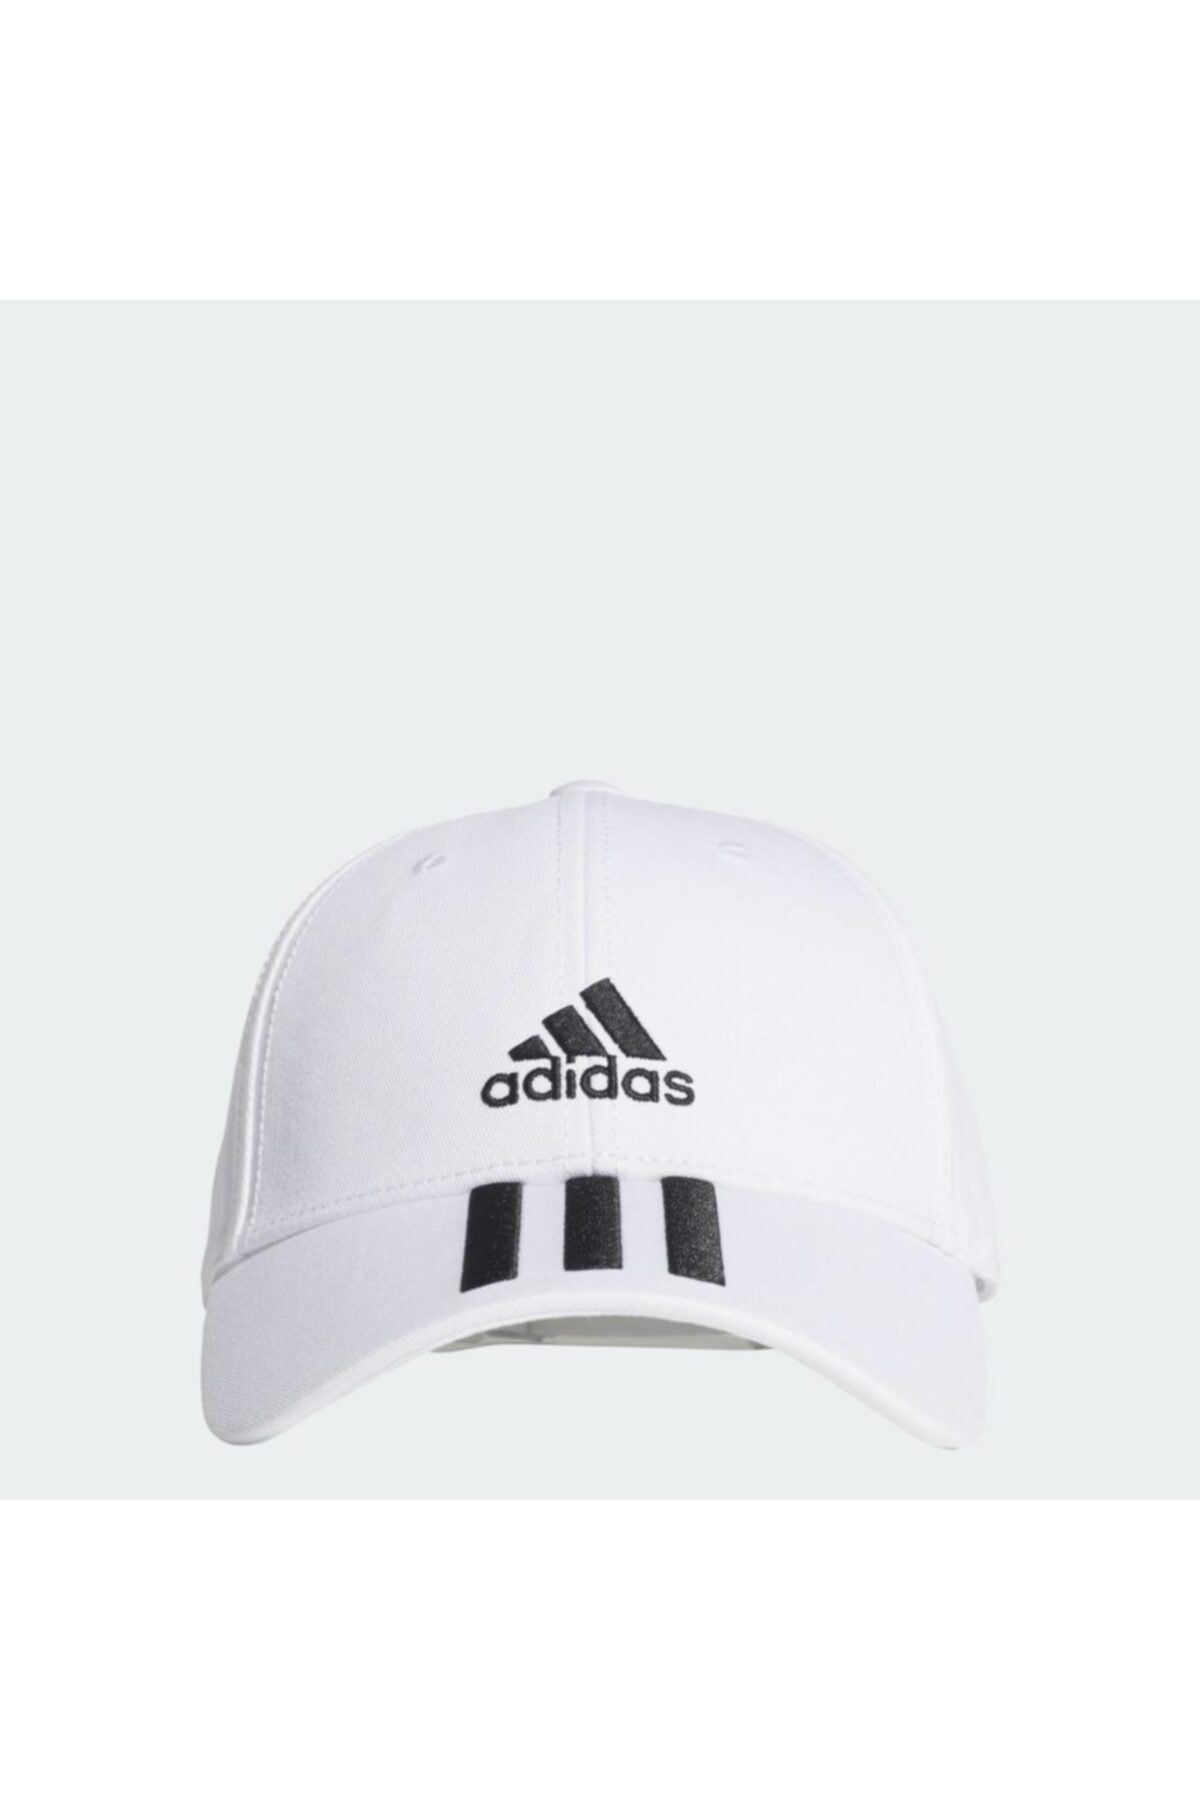 adidas Fq5411 Baseball 3 Stripes Beyaz Spor Şapka